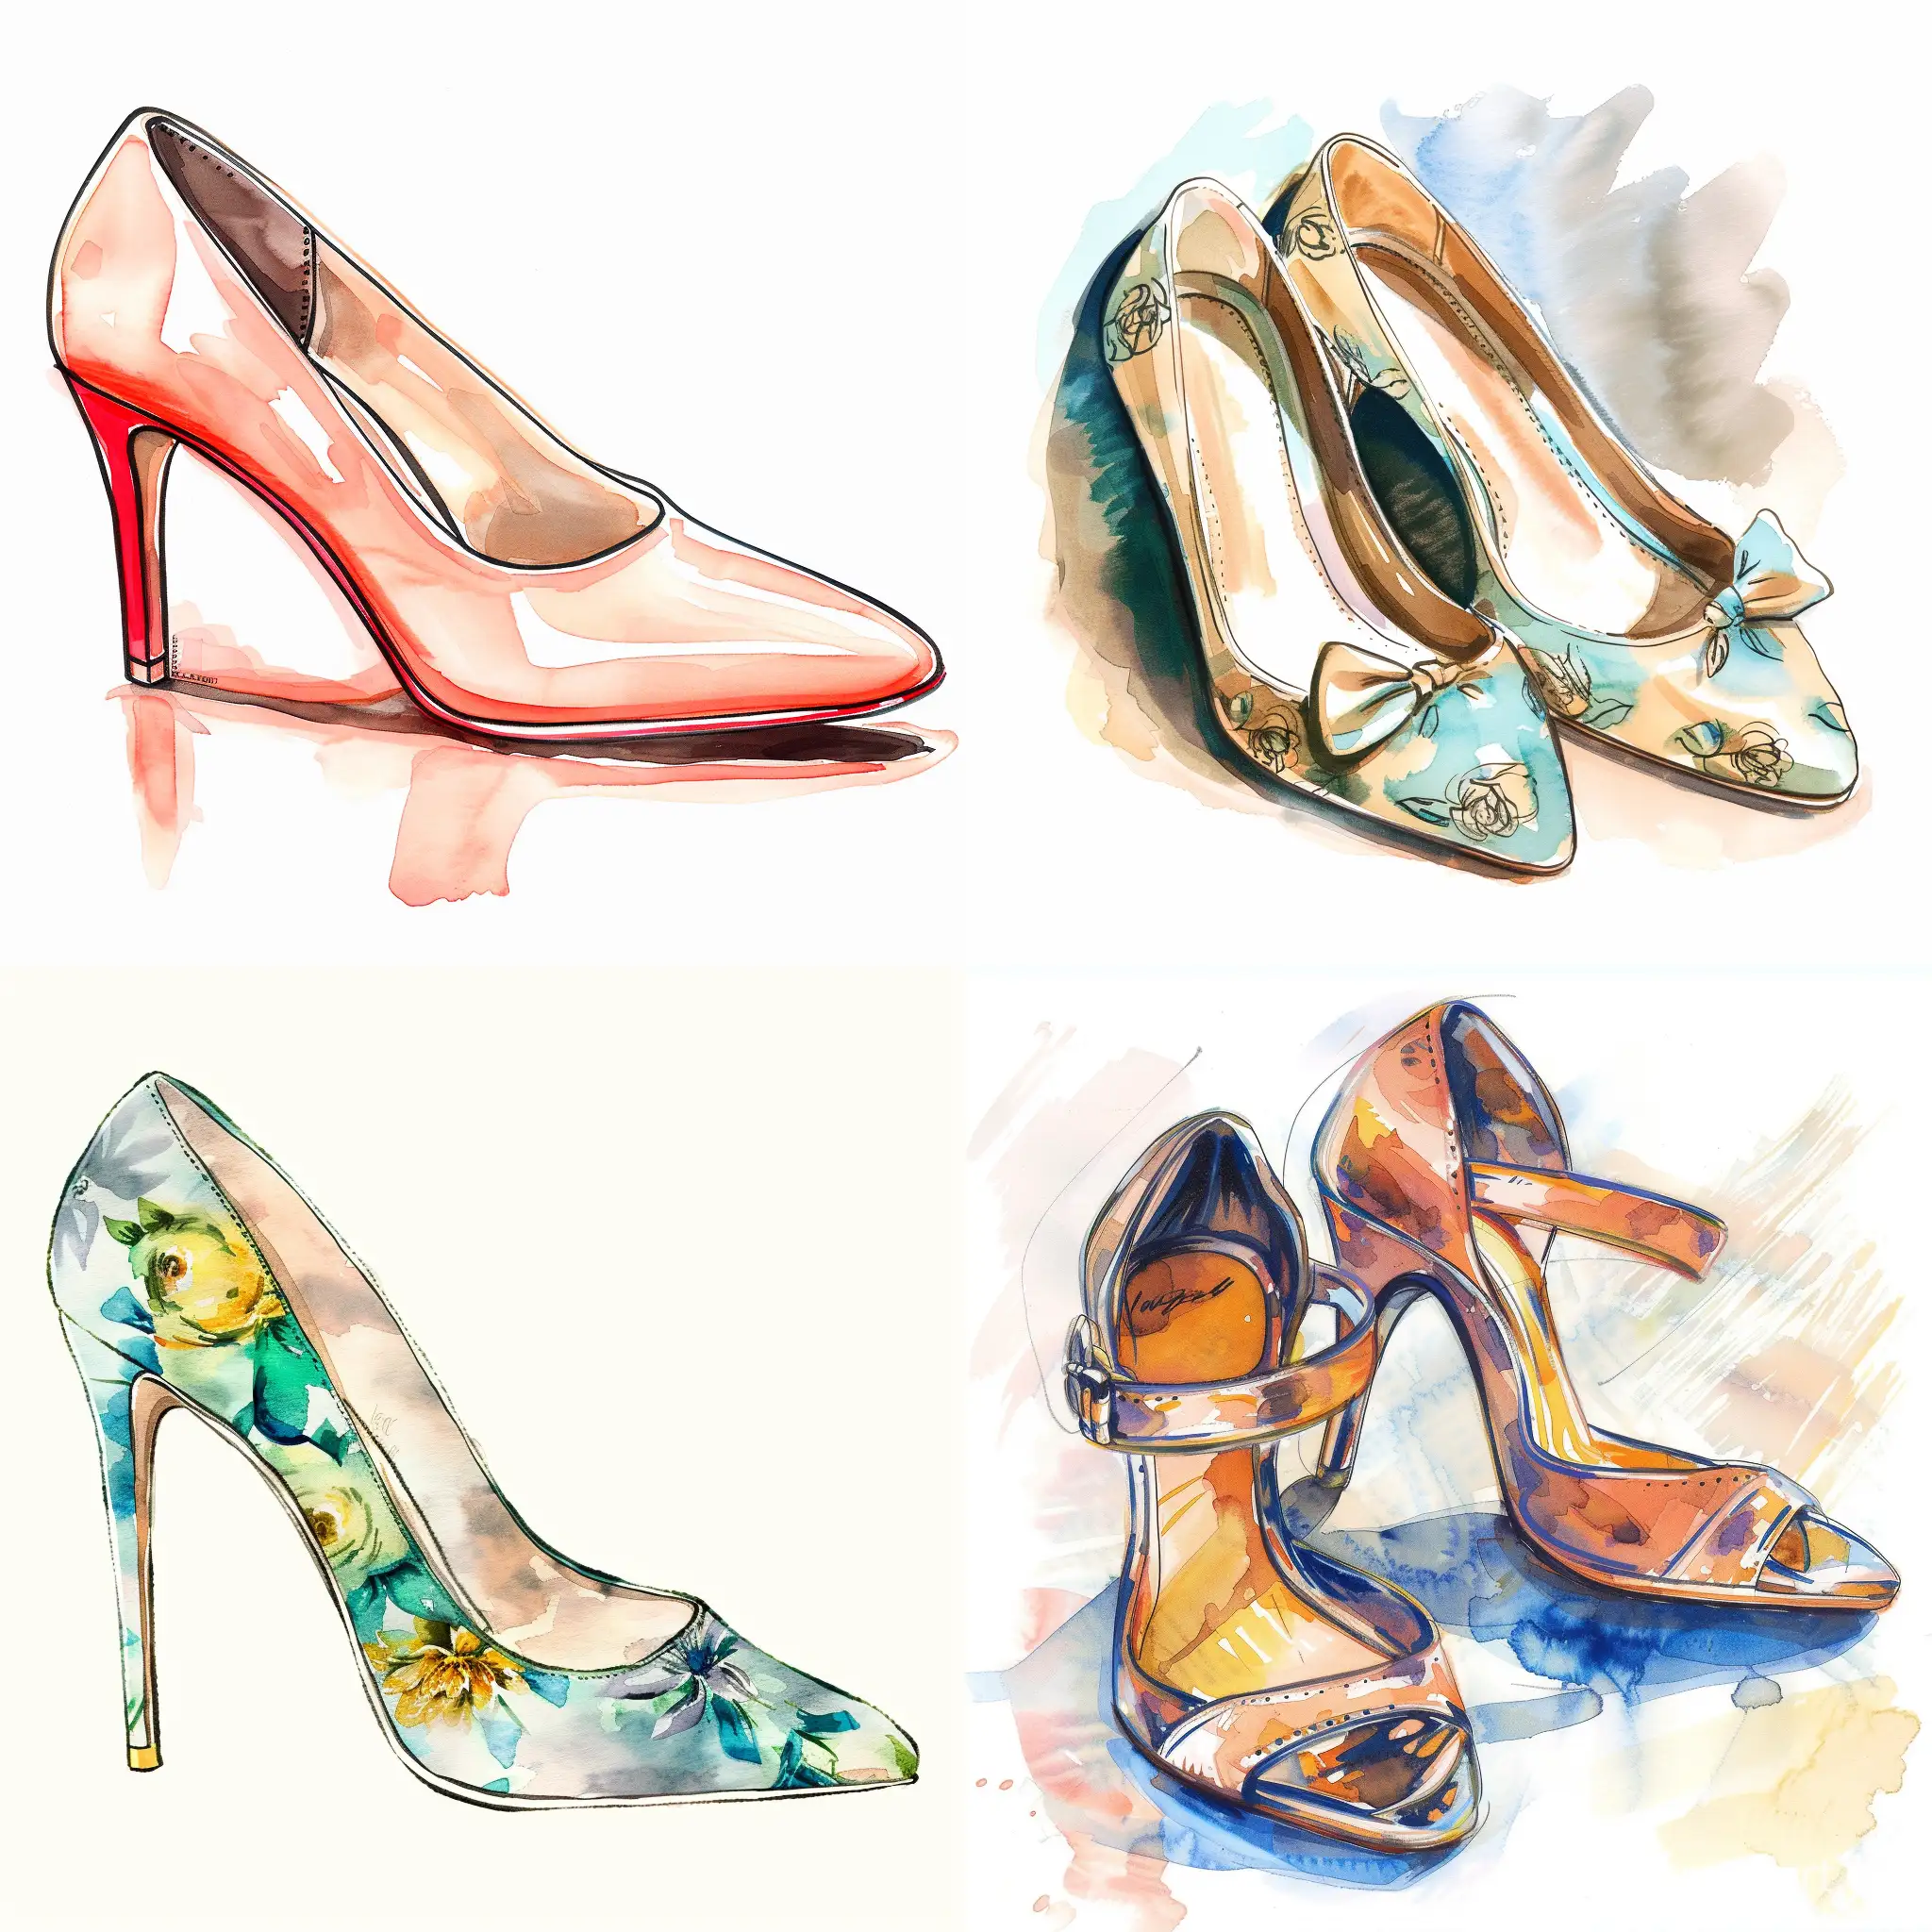 Fashion illustration, fashionable, beautiful women's shoes